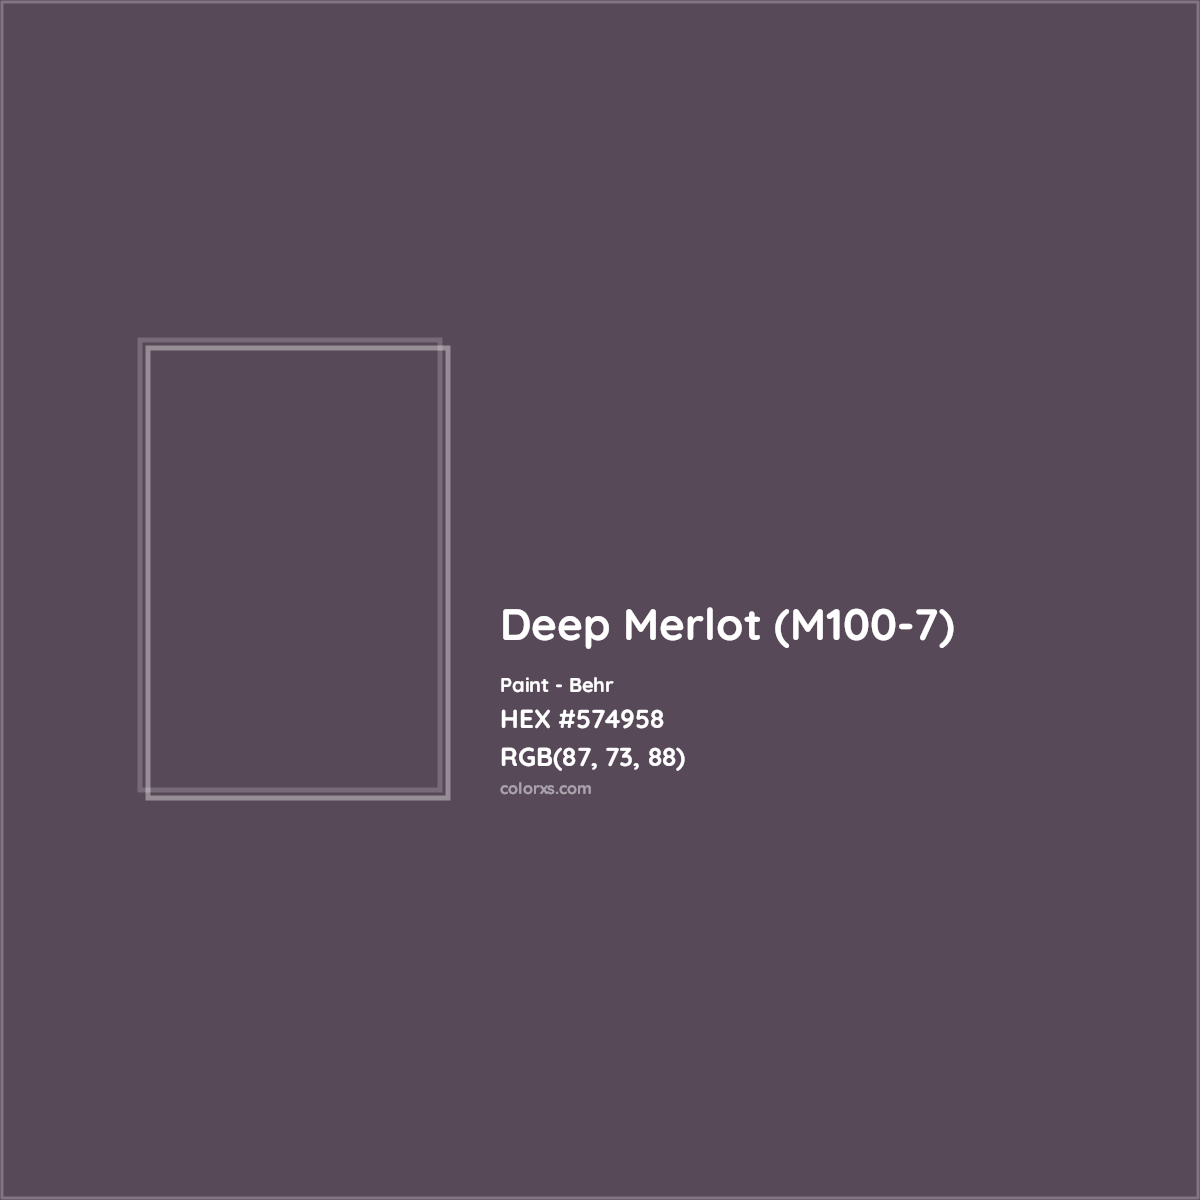 HEX #574958 Deep Merlot (M100-7) Paint Behr - Color Code